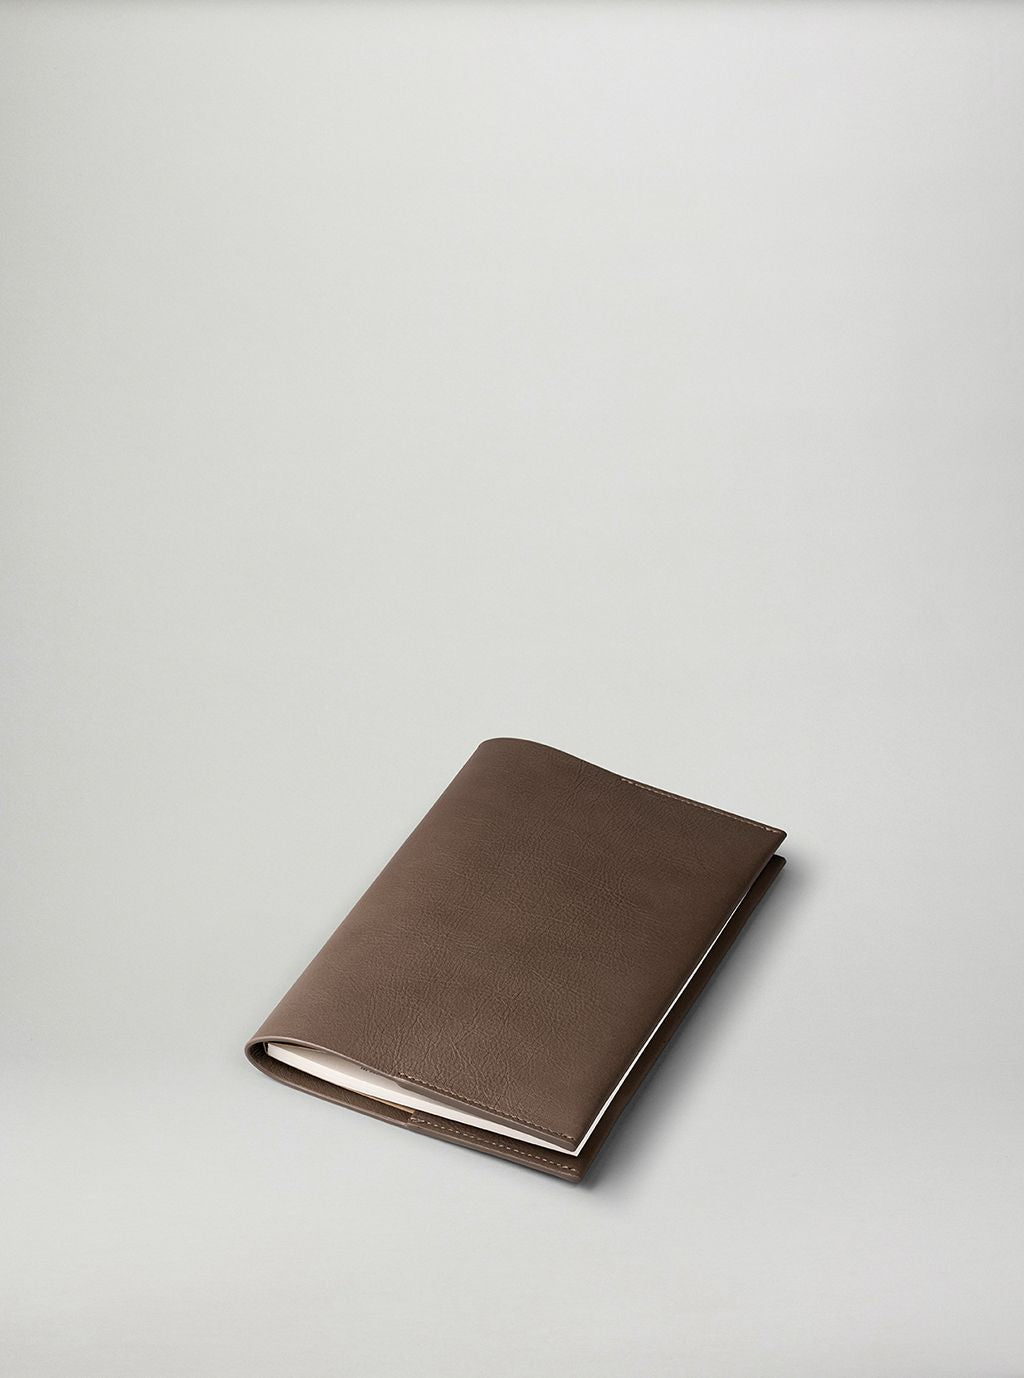 Notebook Cover - Cinnamon